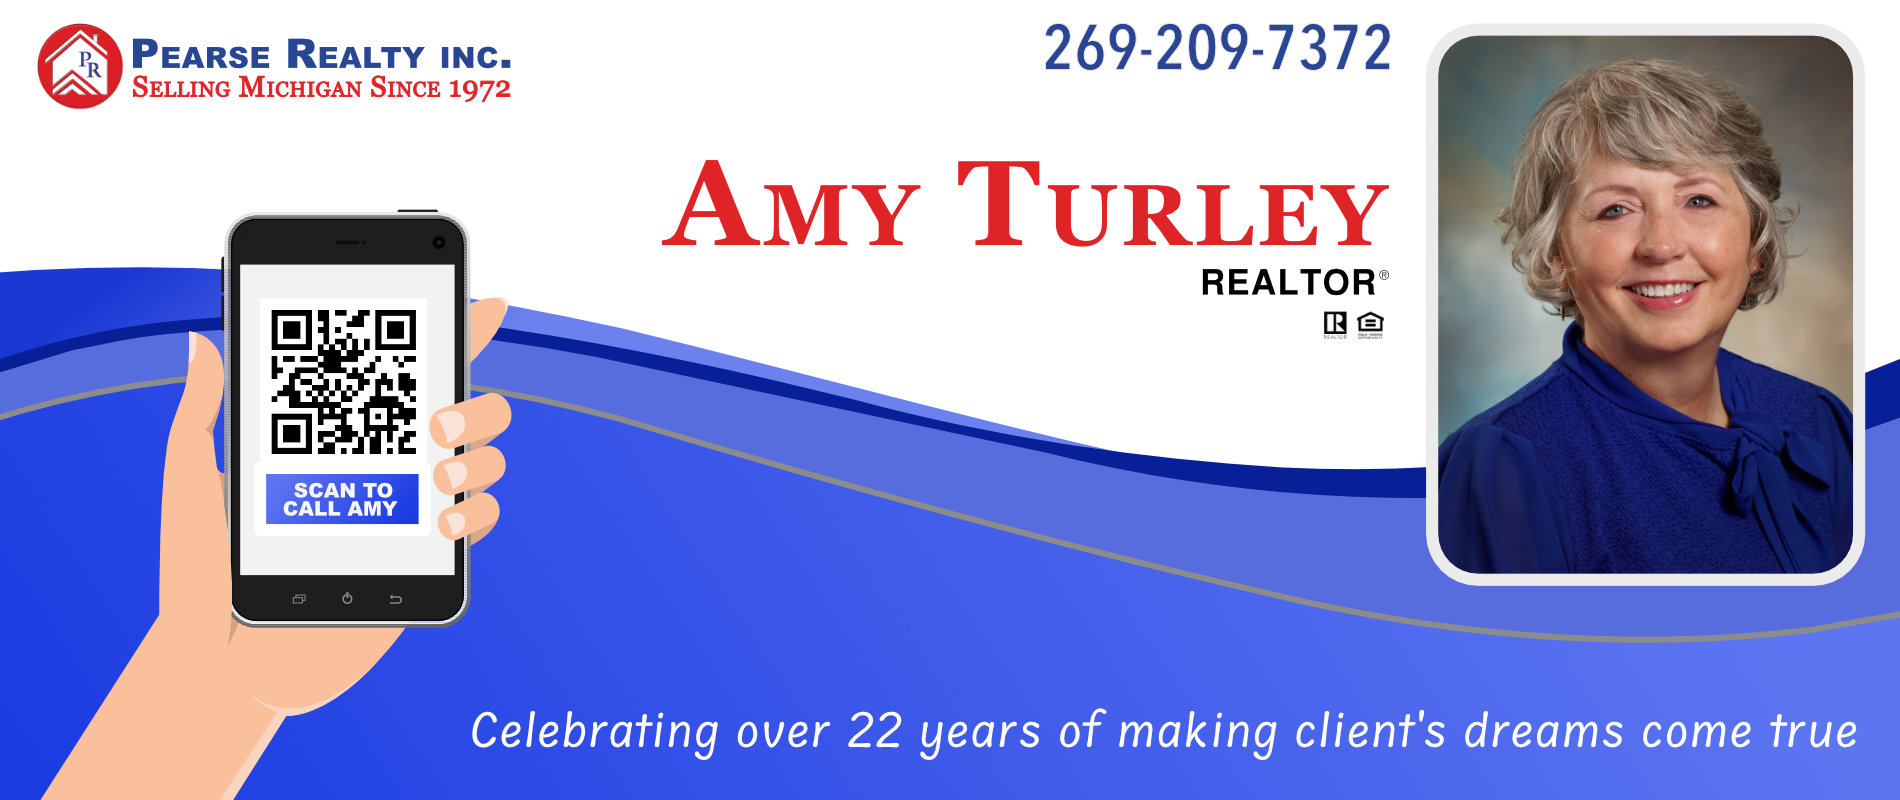 Amy Turley Realtor